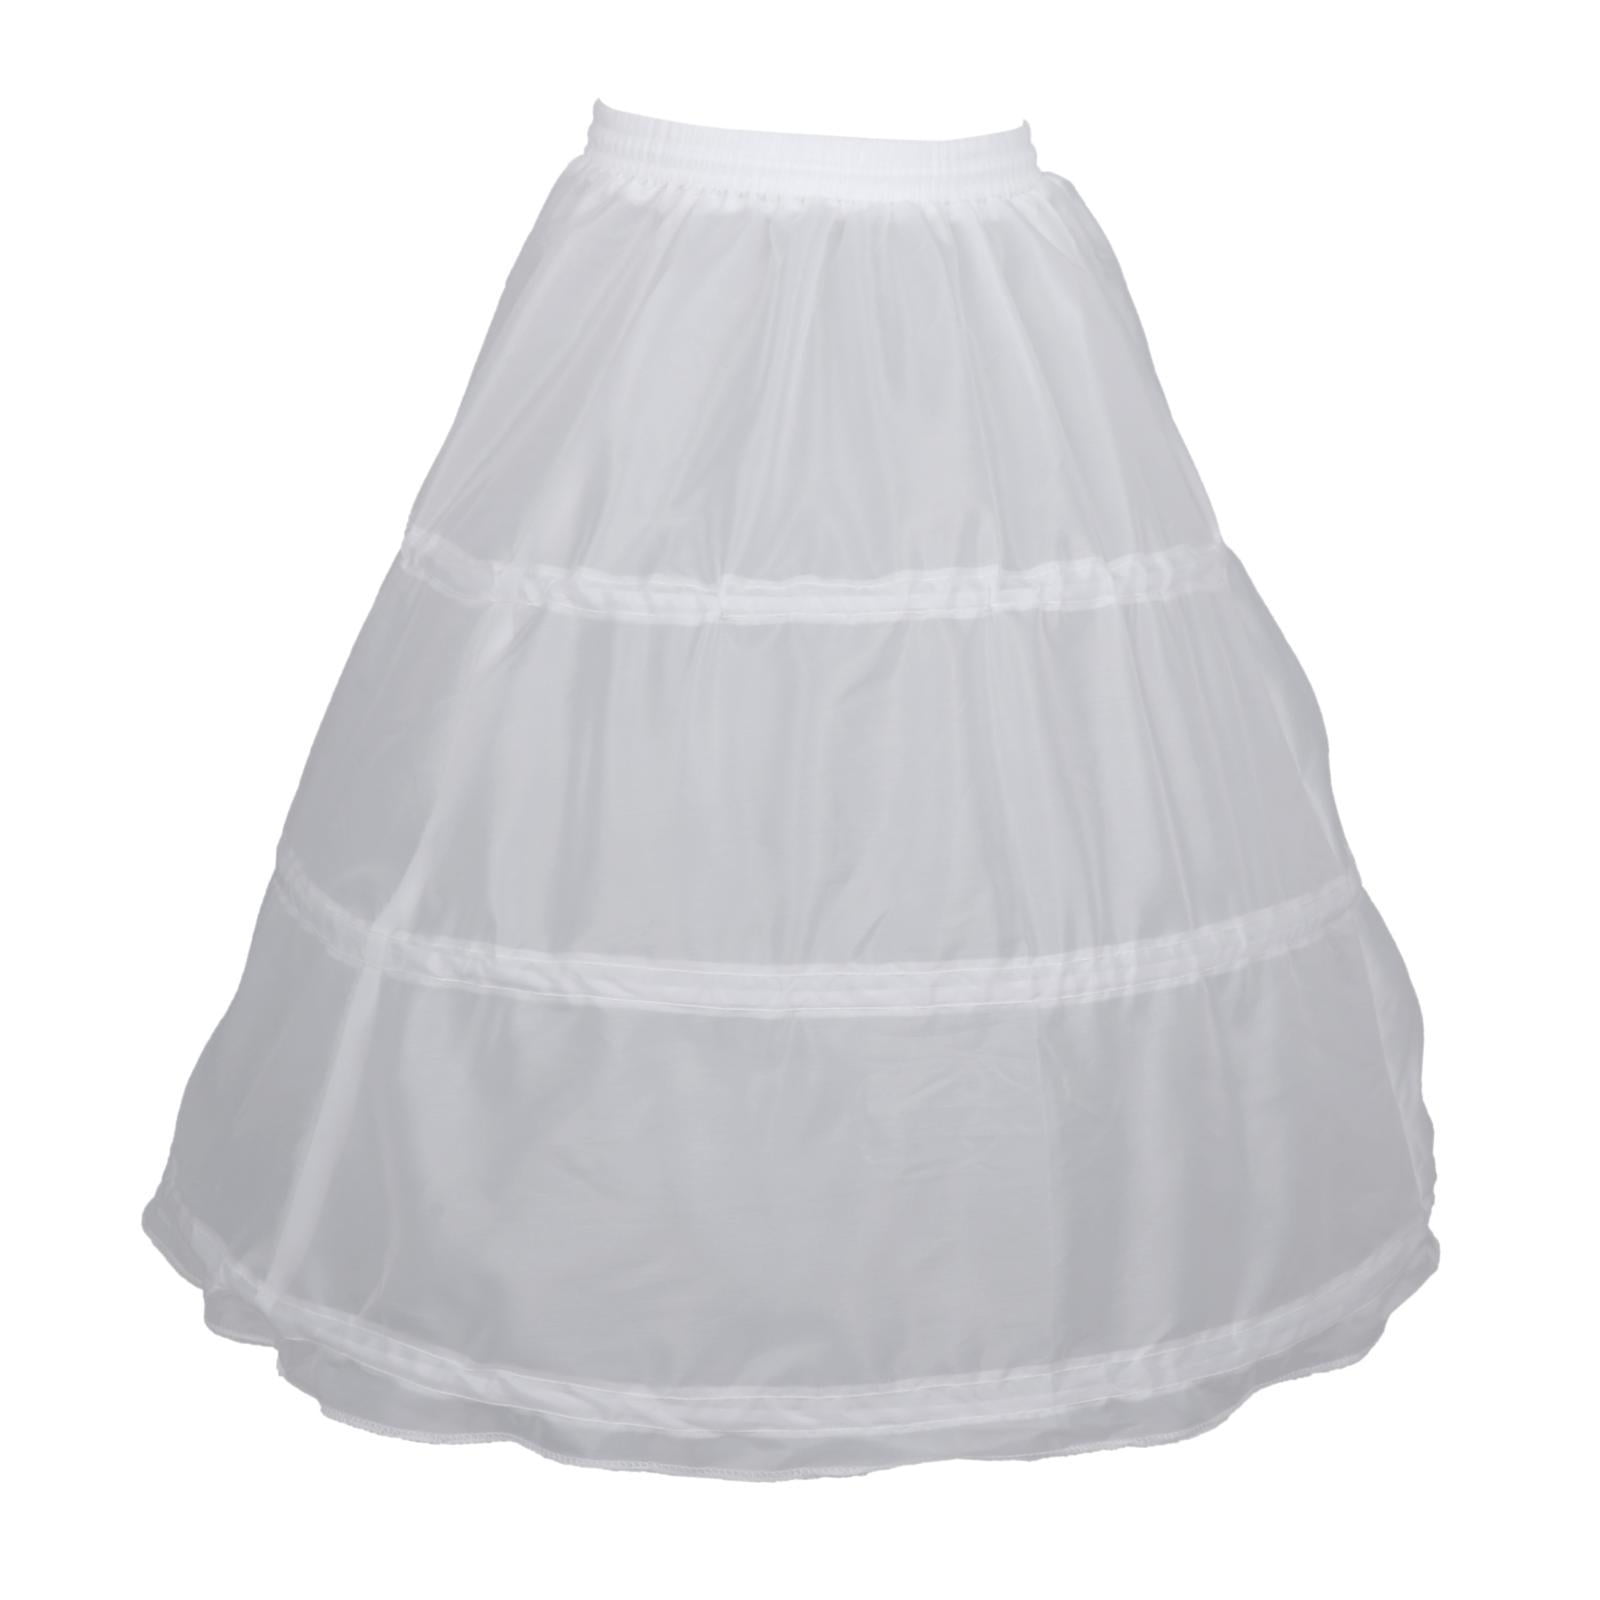 Buy Mohan Shoppe Crinoline Underskirt Crinoline Petticoat Ball Gown Skirt  Slips for Lehenga, Sarees, Gowns, Wedding Dress, Skirts etc. (Free Size) (6  Hoop) at Amazon.in